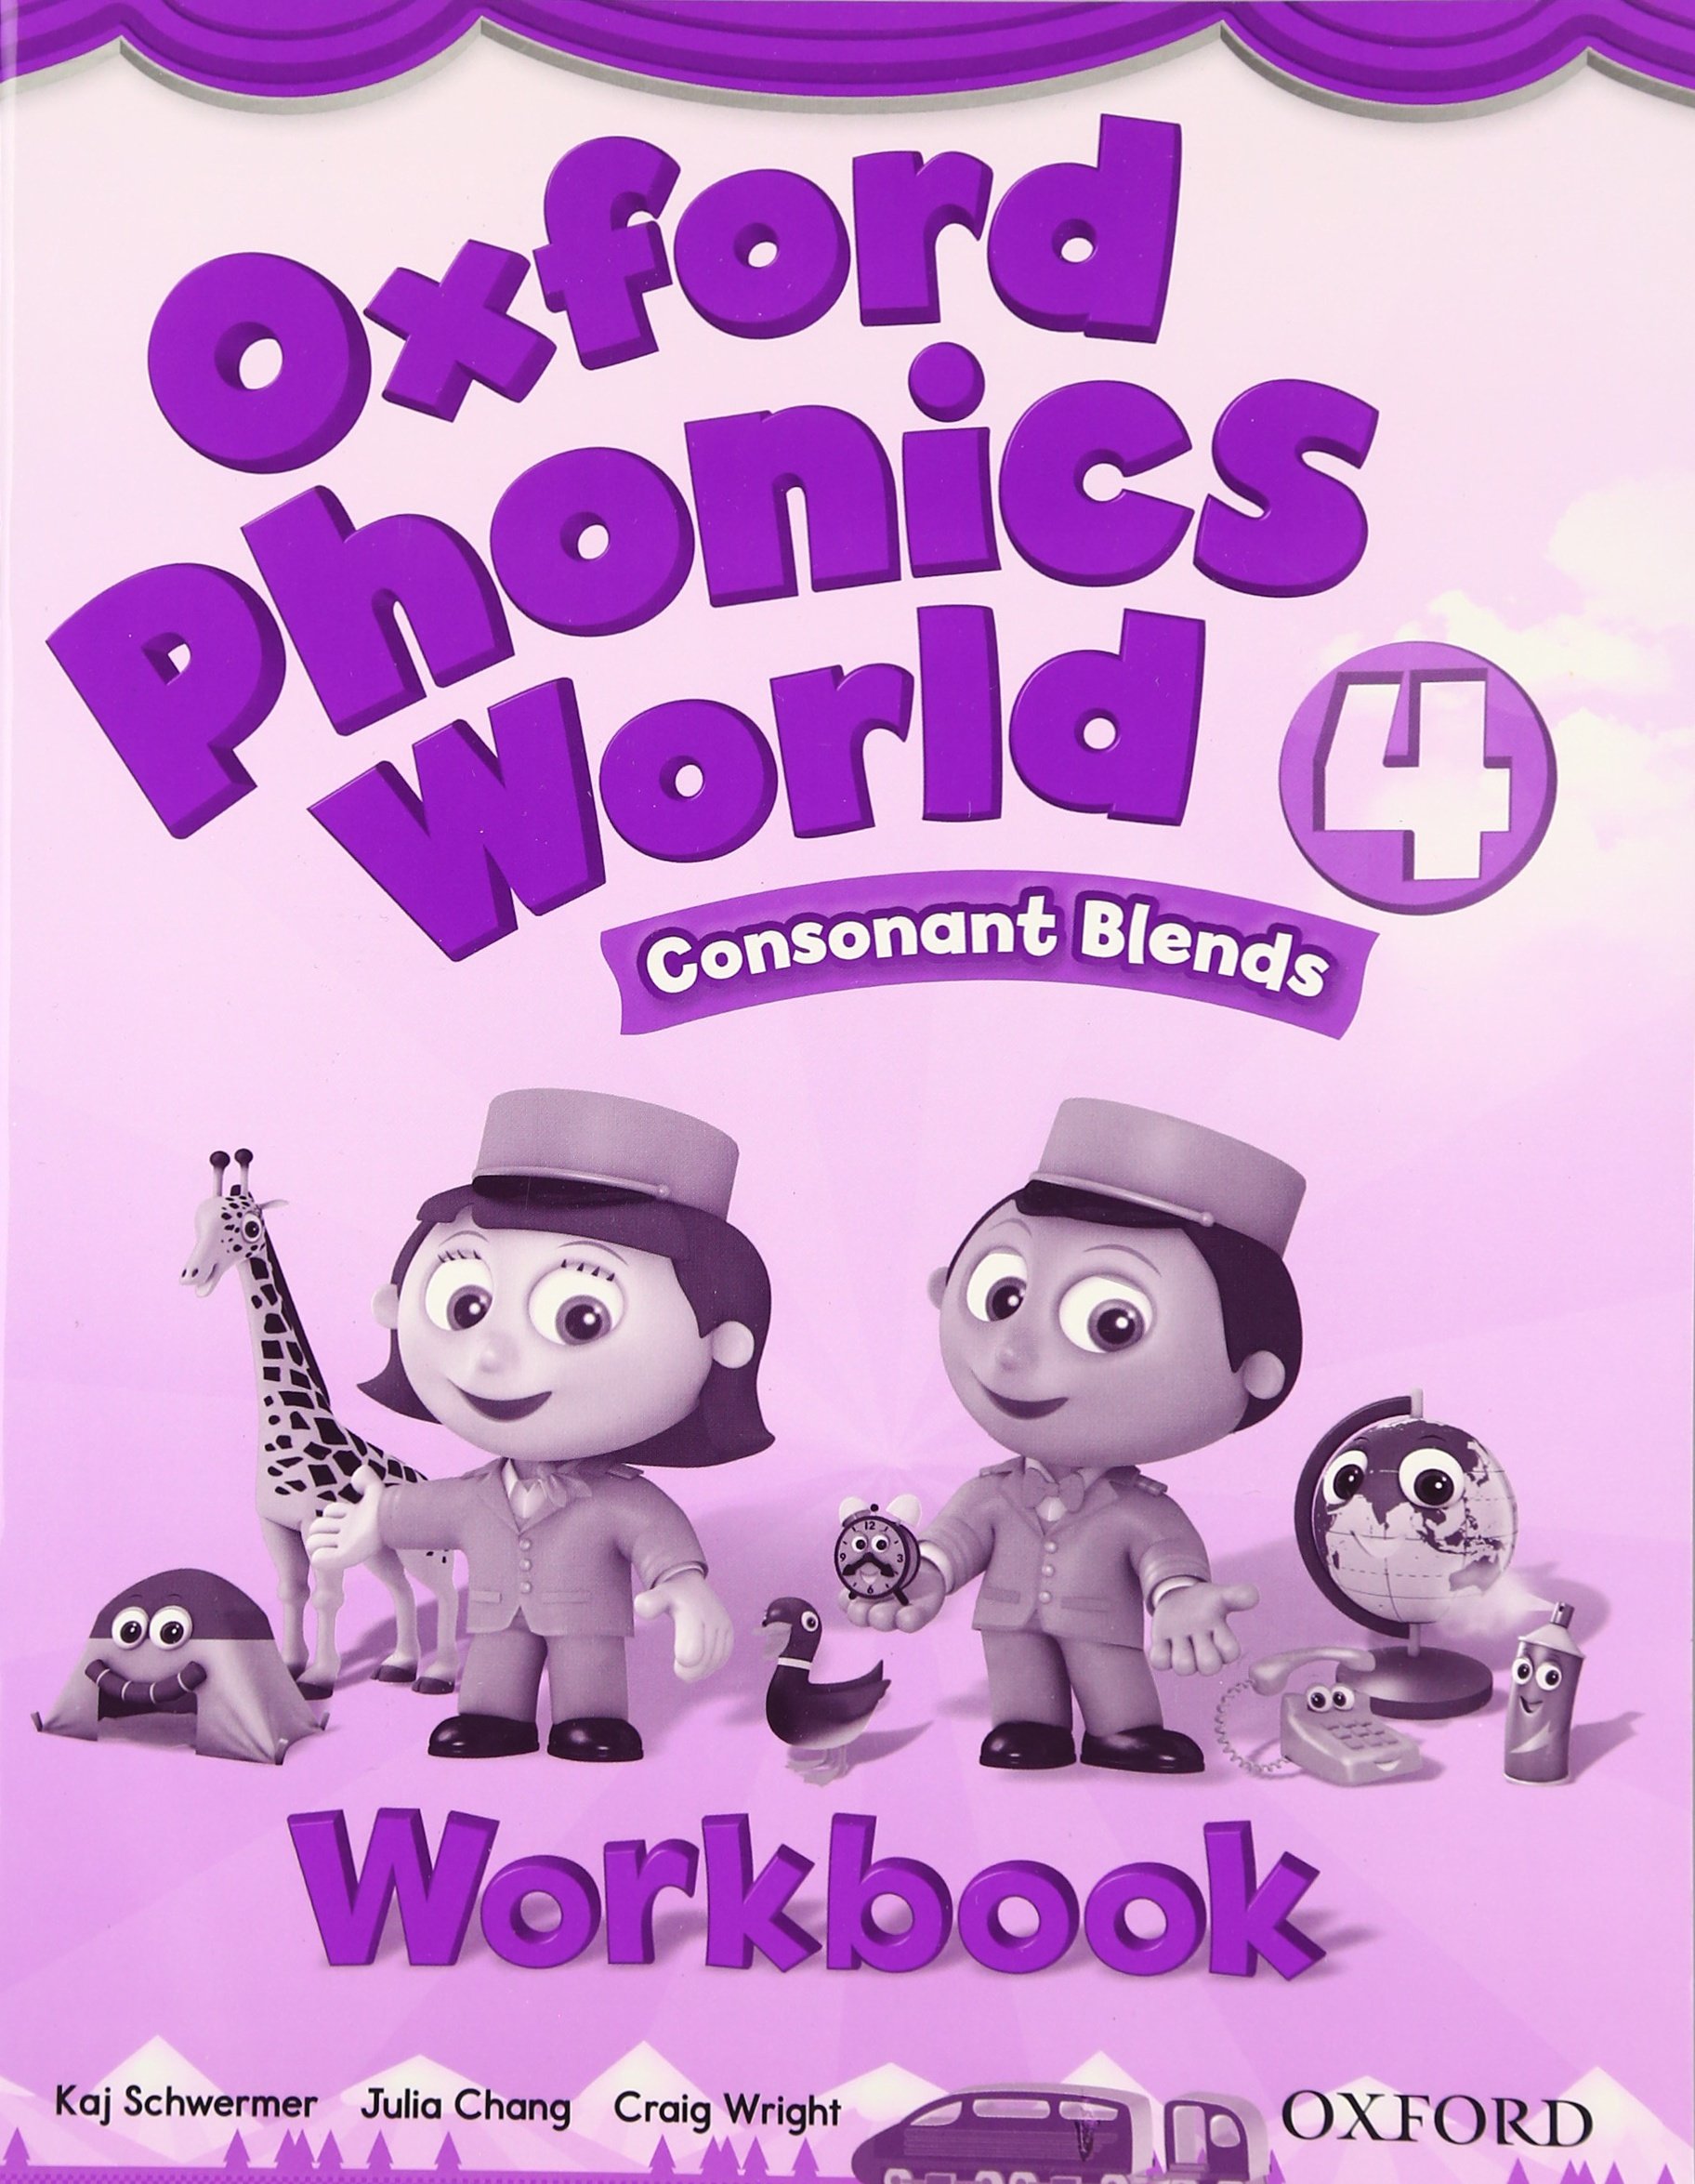 OXFORD PHONICS WORLD 4 Workbook